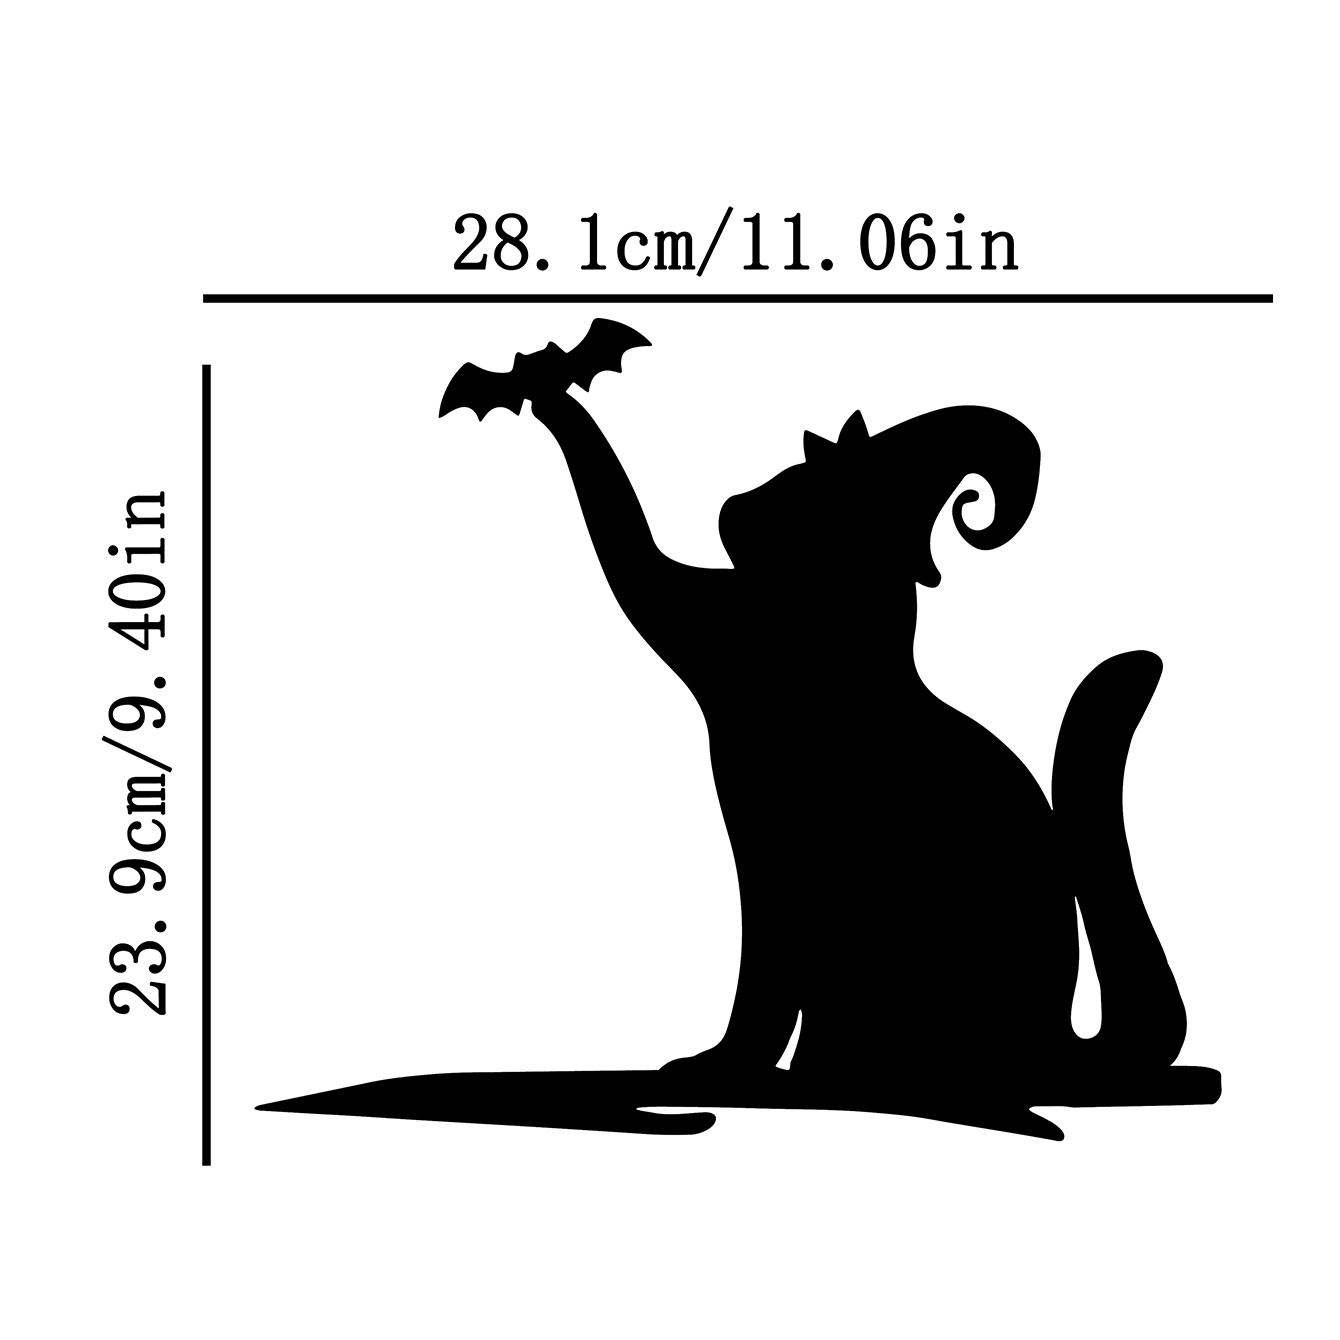 halloween cat silhouette pattern